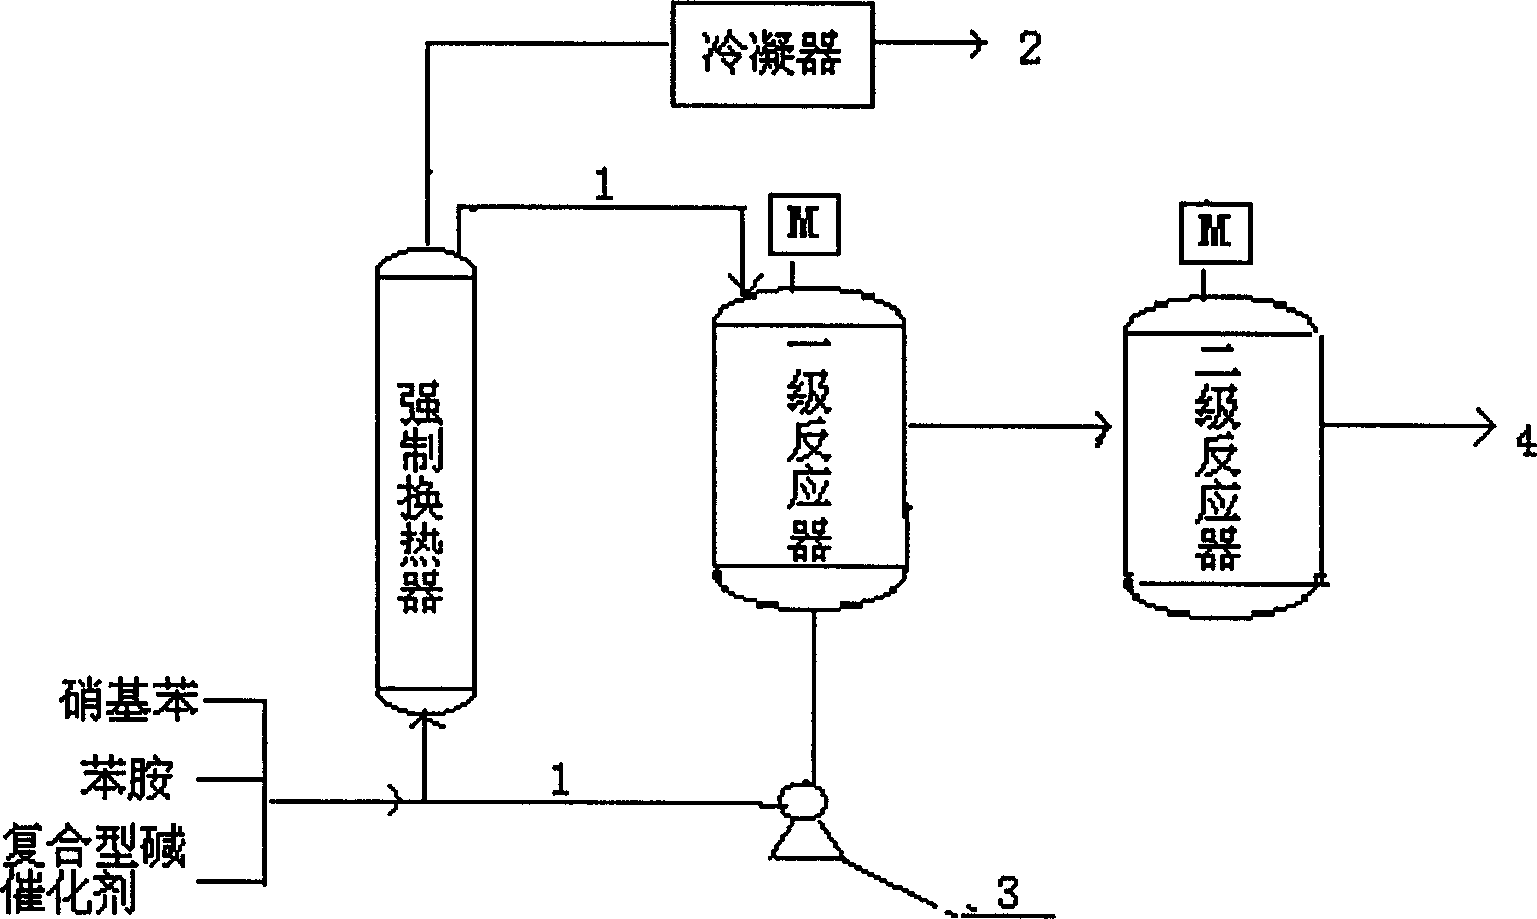 Method for synthesizing 4-nitro diphenylamine and 4-nitroso diphenylamine or/and their salts